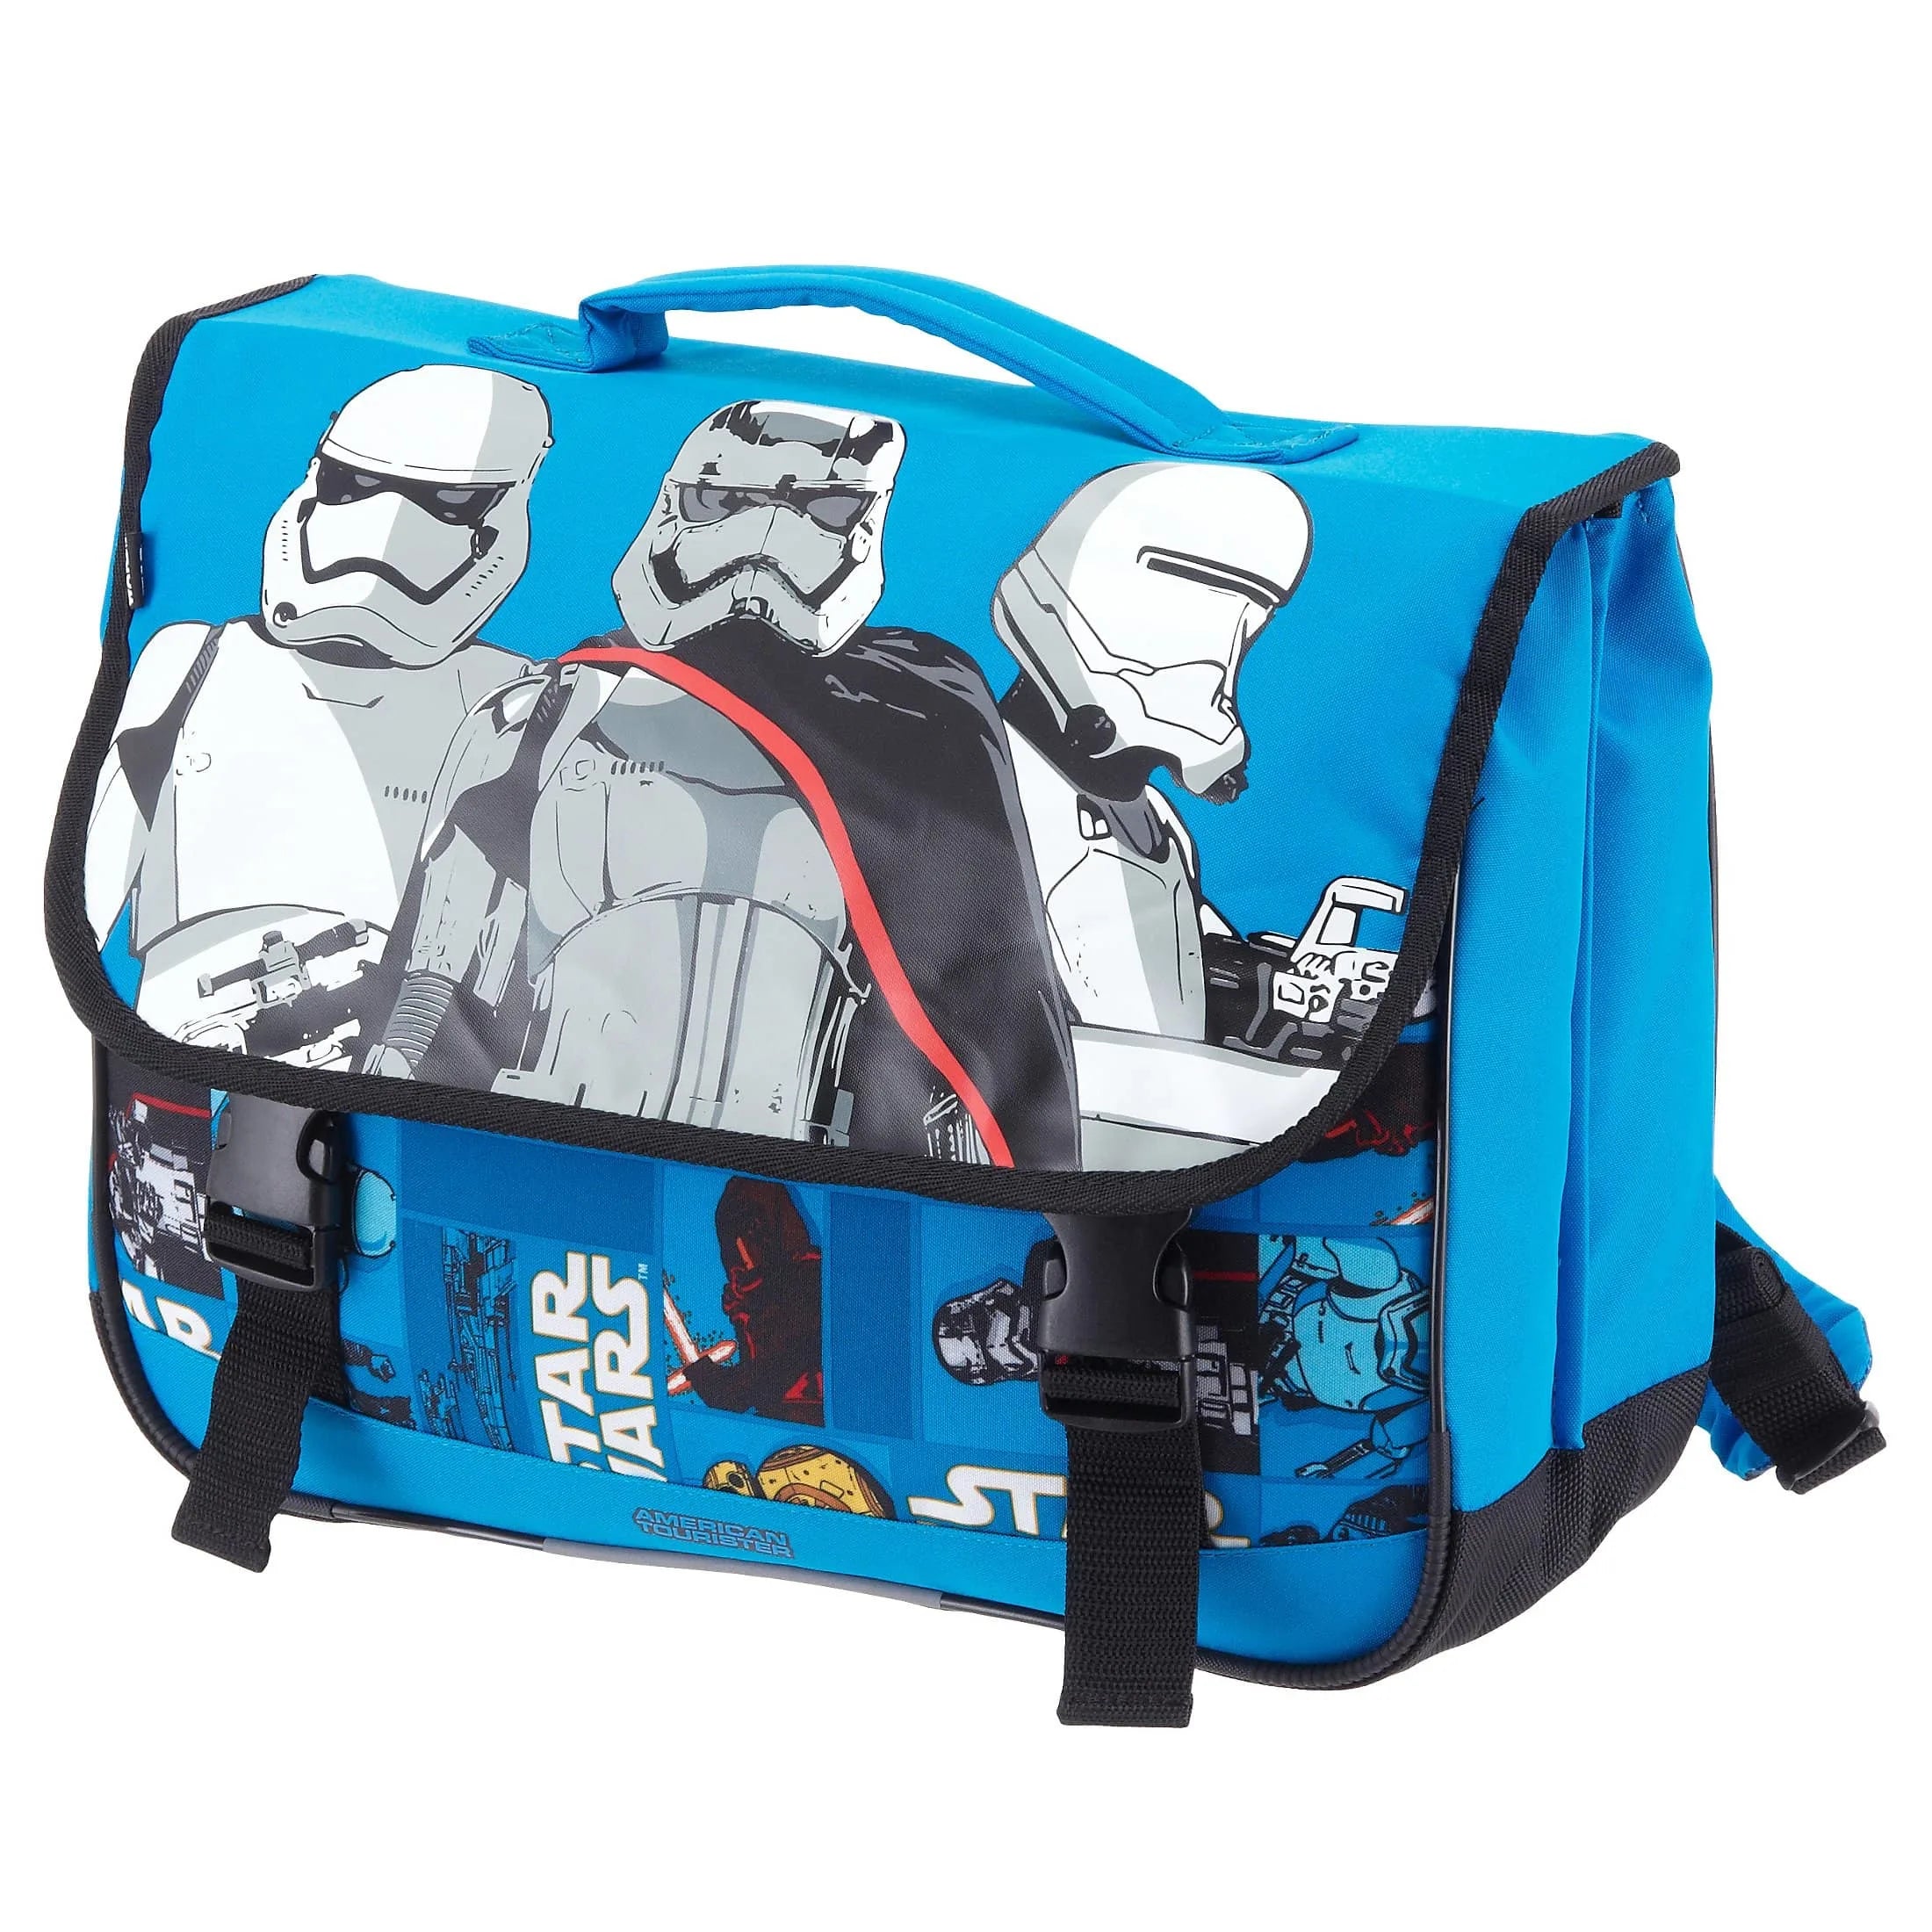 American Tourister Star Wars New Wonder school bag 39 cm - star wars saga